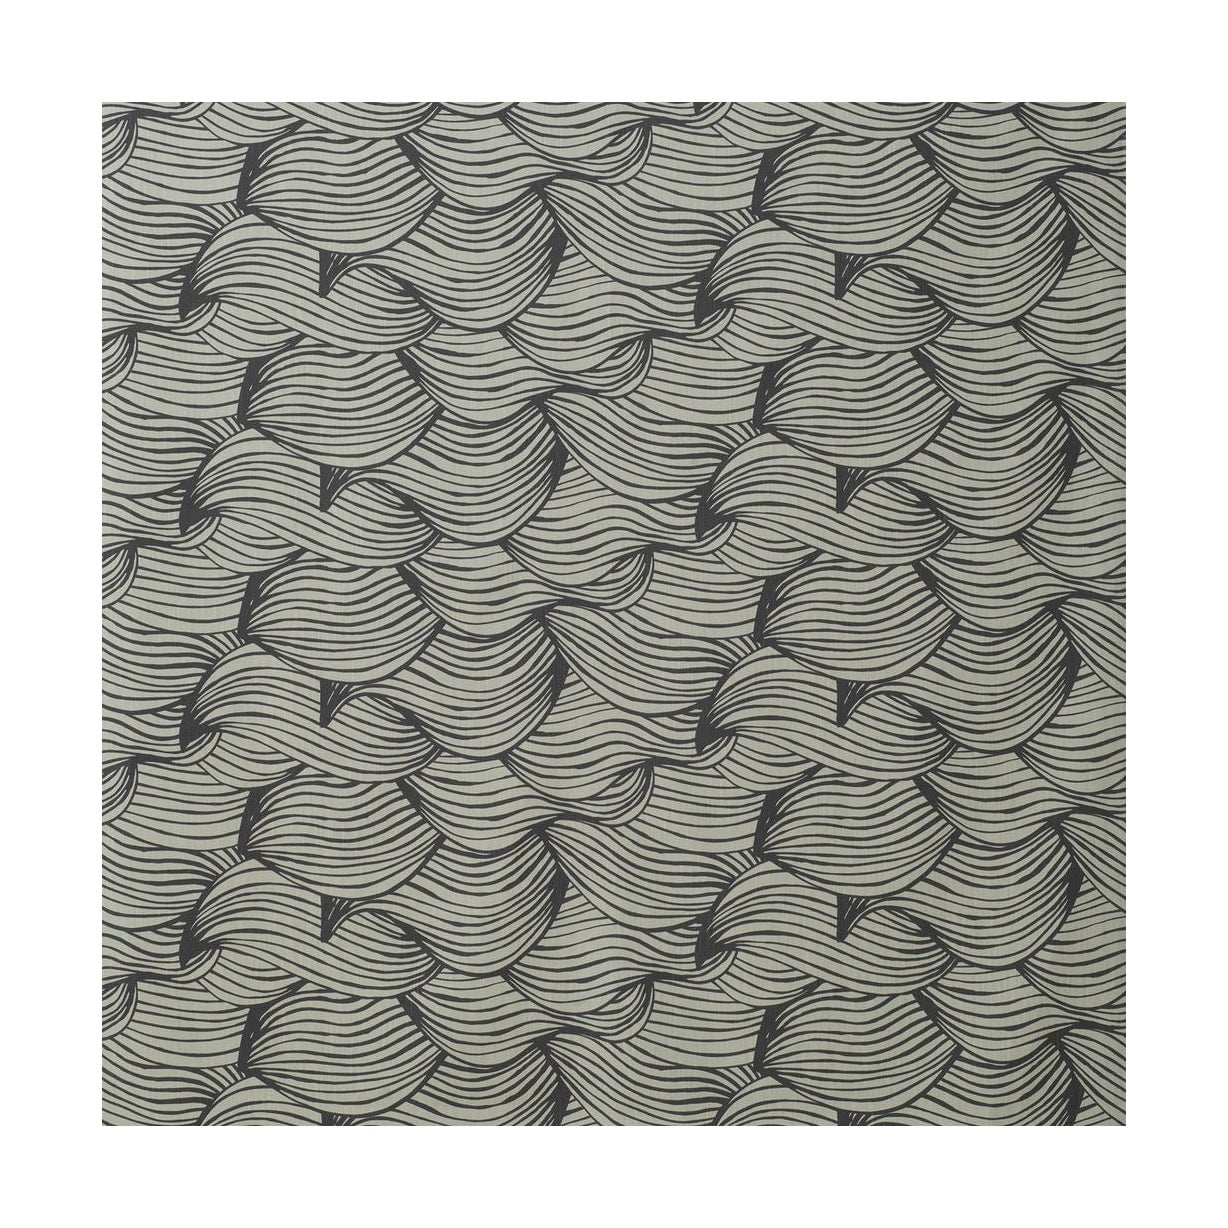 Spira Wave Fabric Ancho de 150 cm (precio por metro), gris